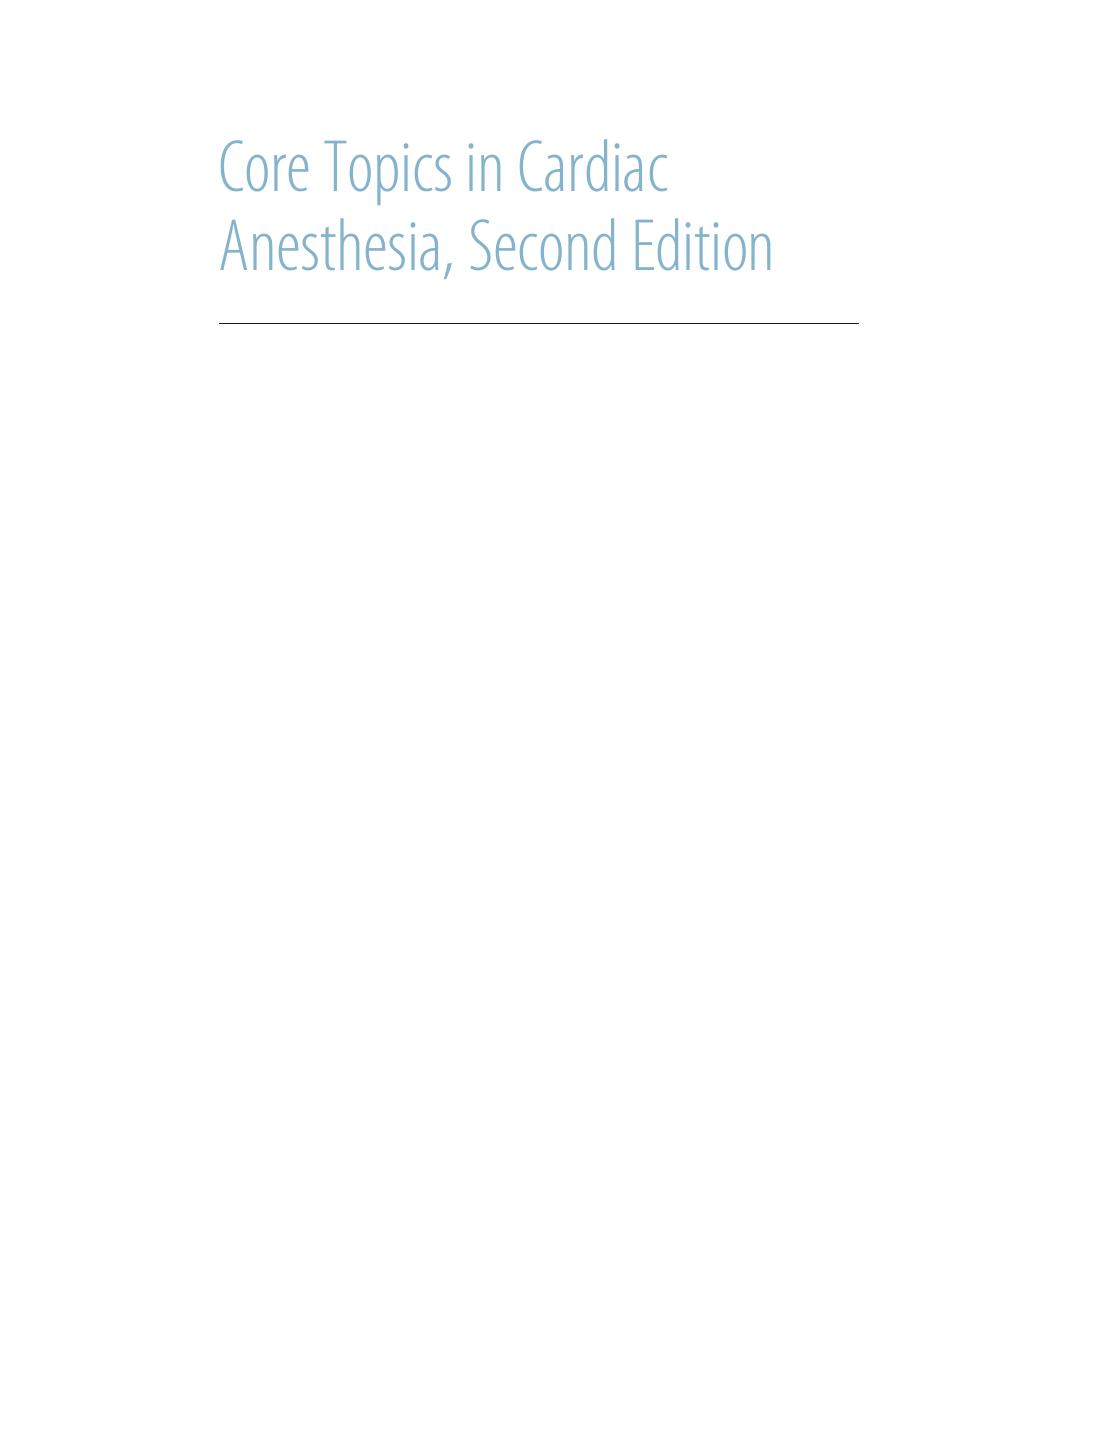 Core topics in cardiac anaesthesia 2nd ed 2012